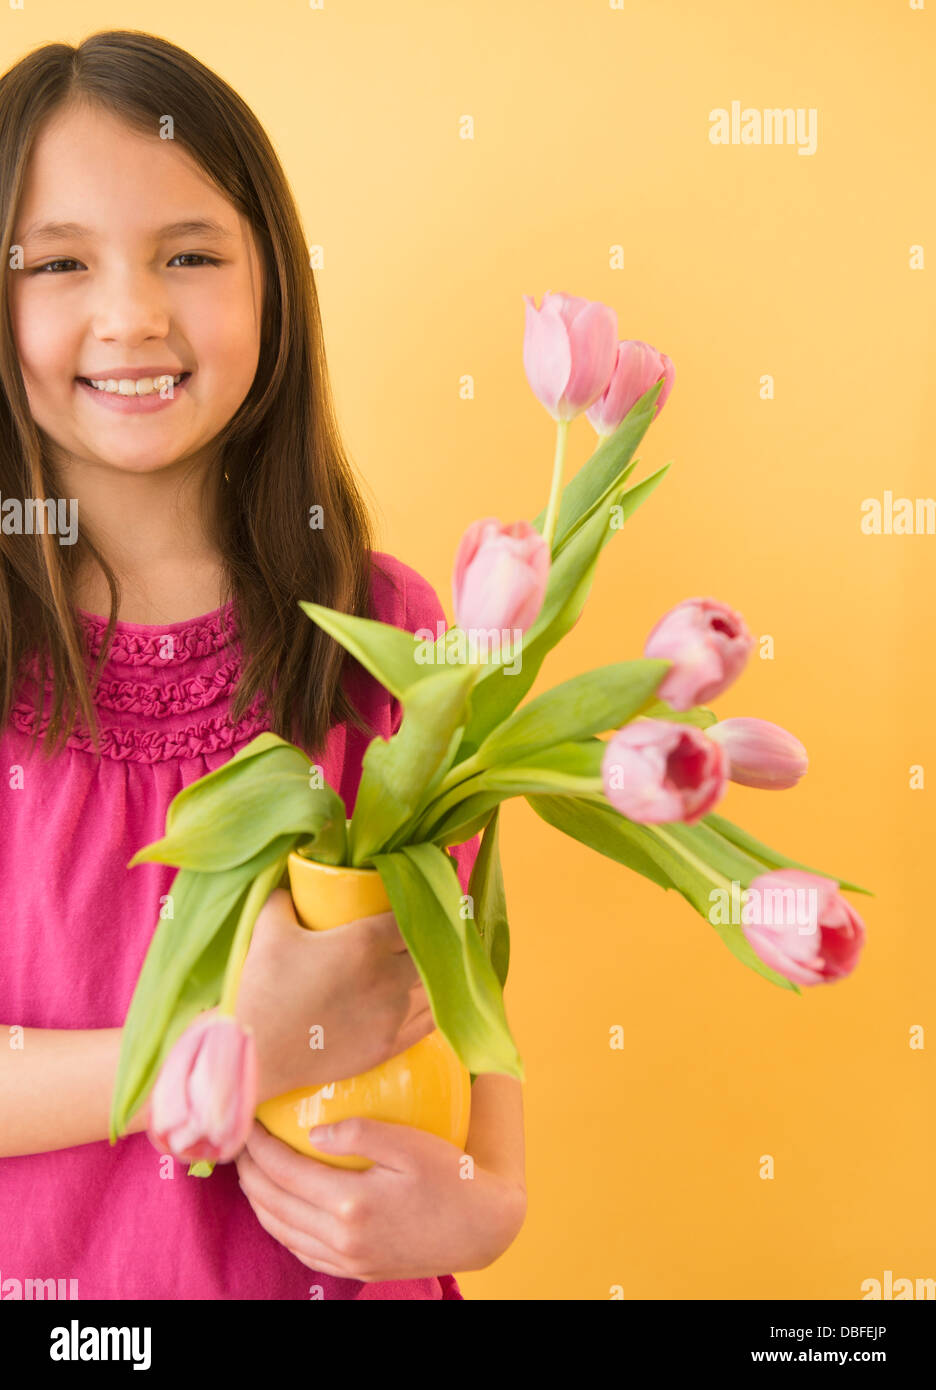 Mixed race girl holding vase of flowers Stock Photo